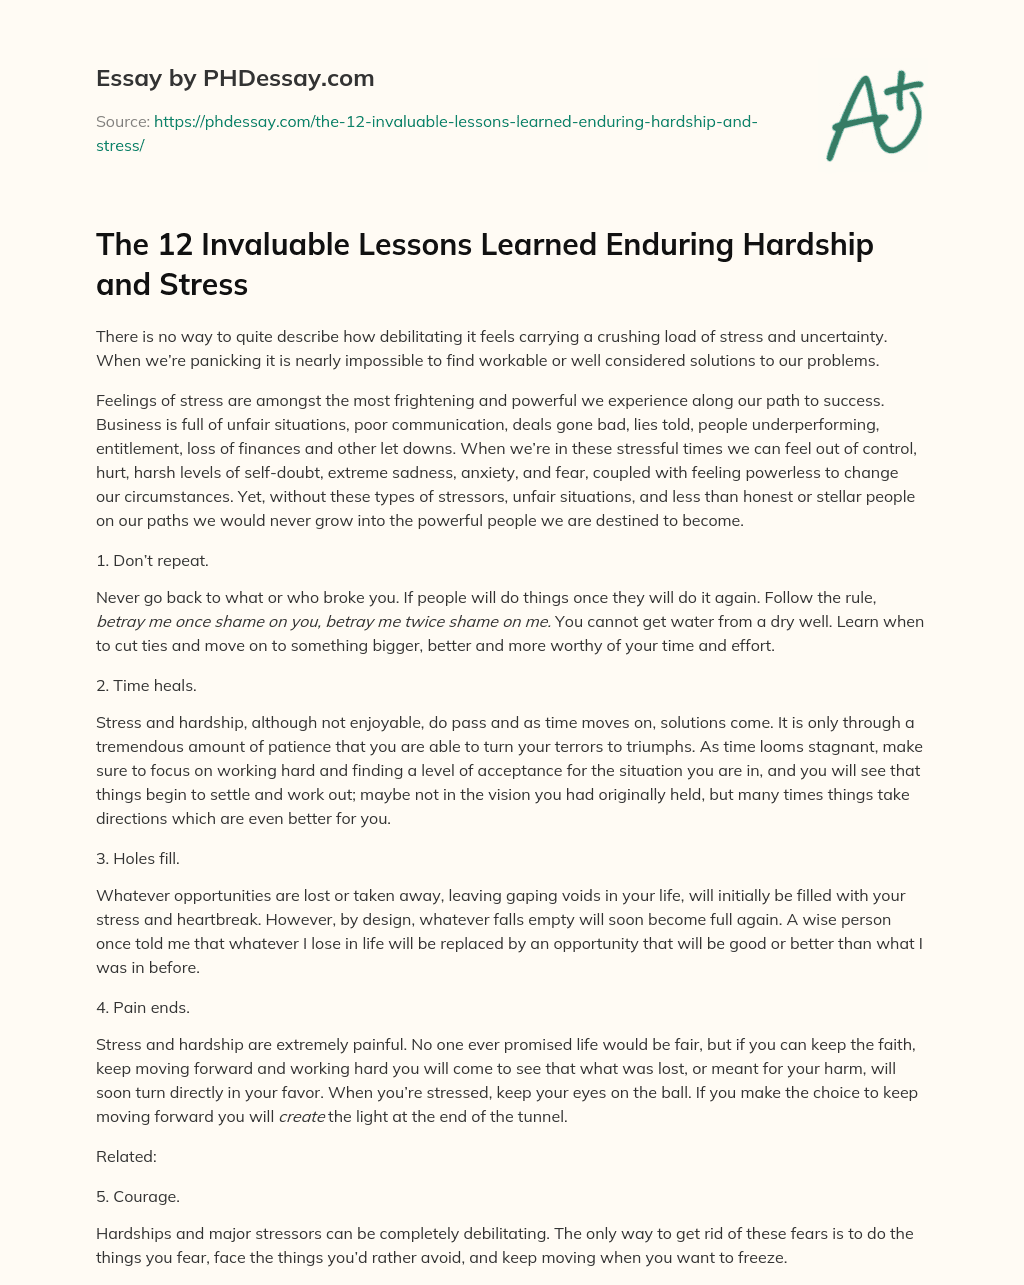 hardship teaches life lessons essay